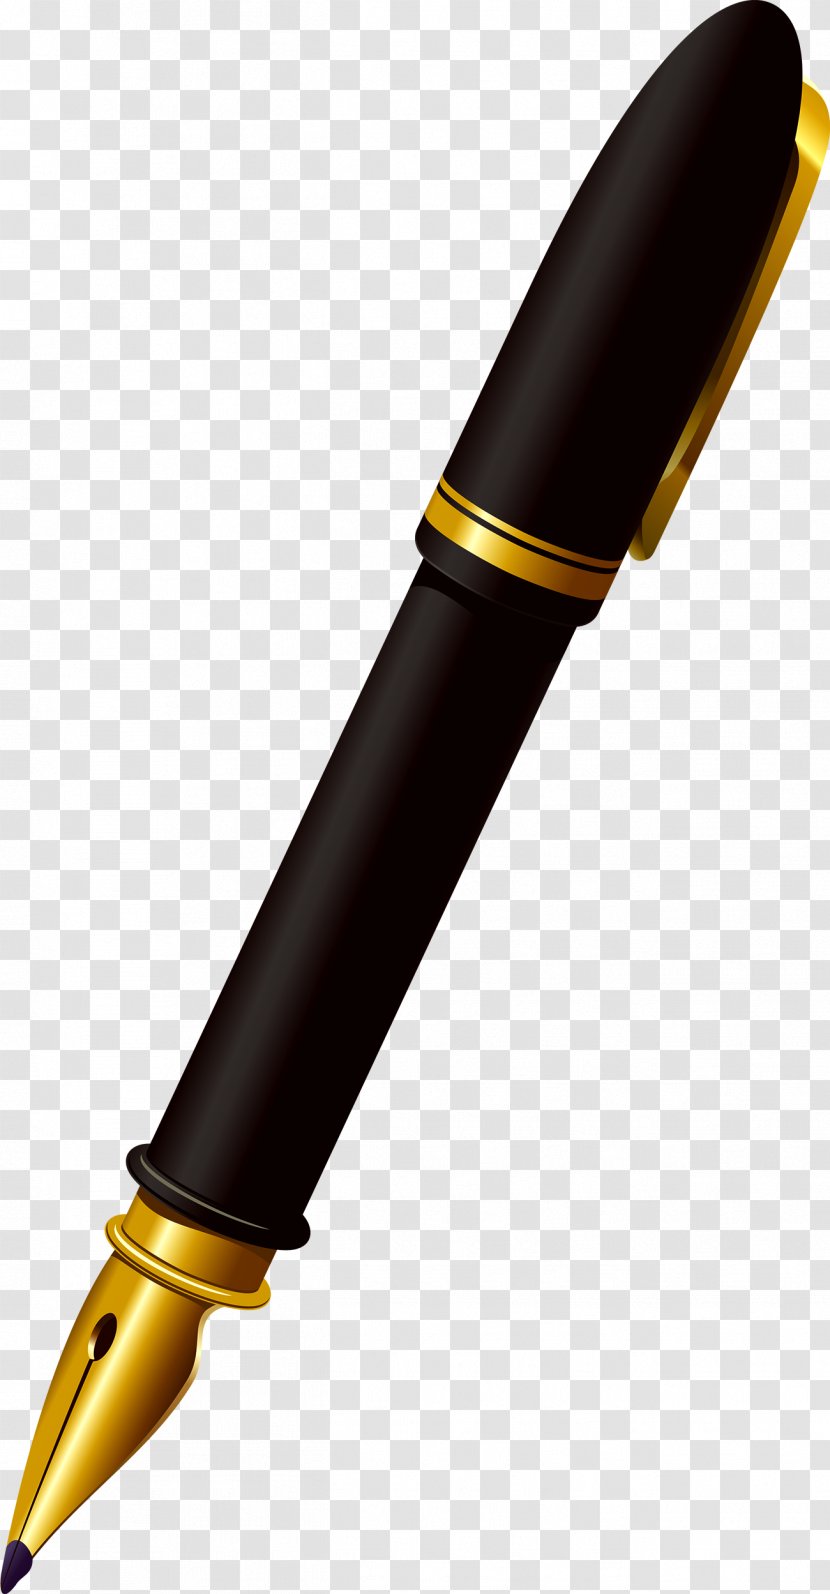 Pen Ink Brush Stationery - Paintbrush Transparent PNG